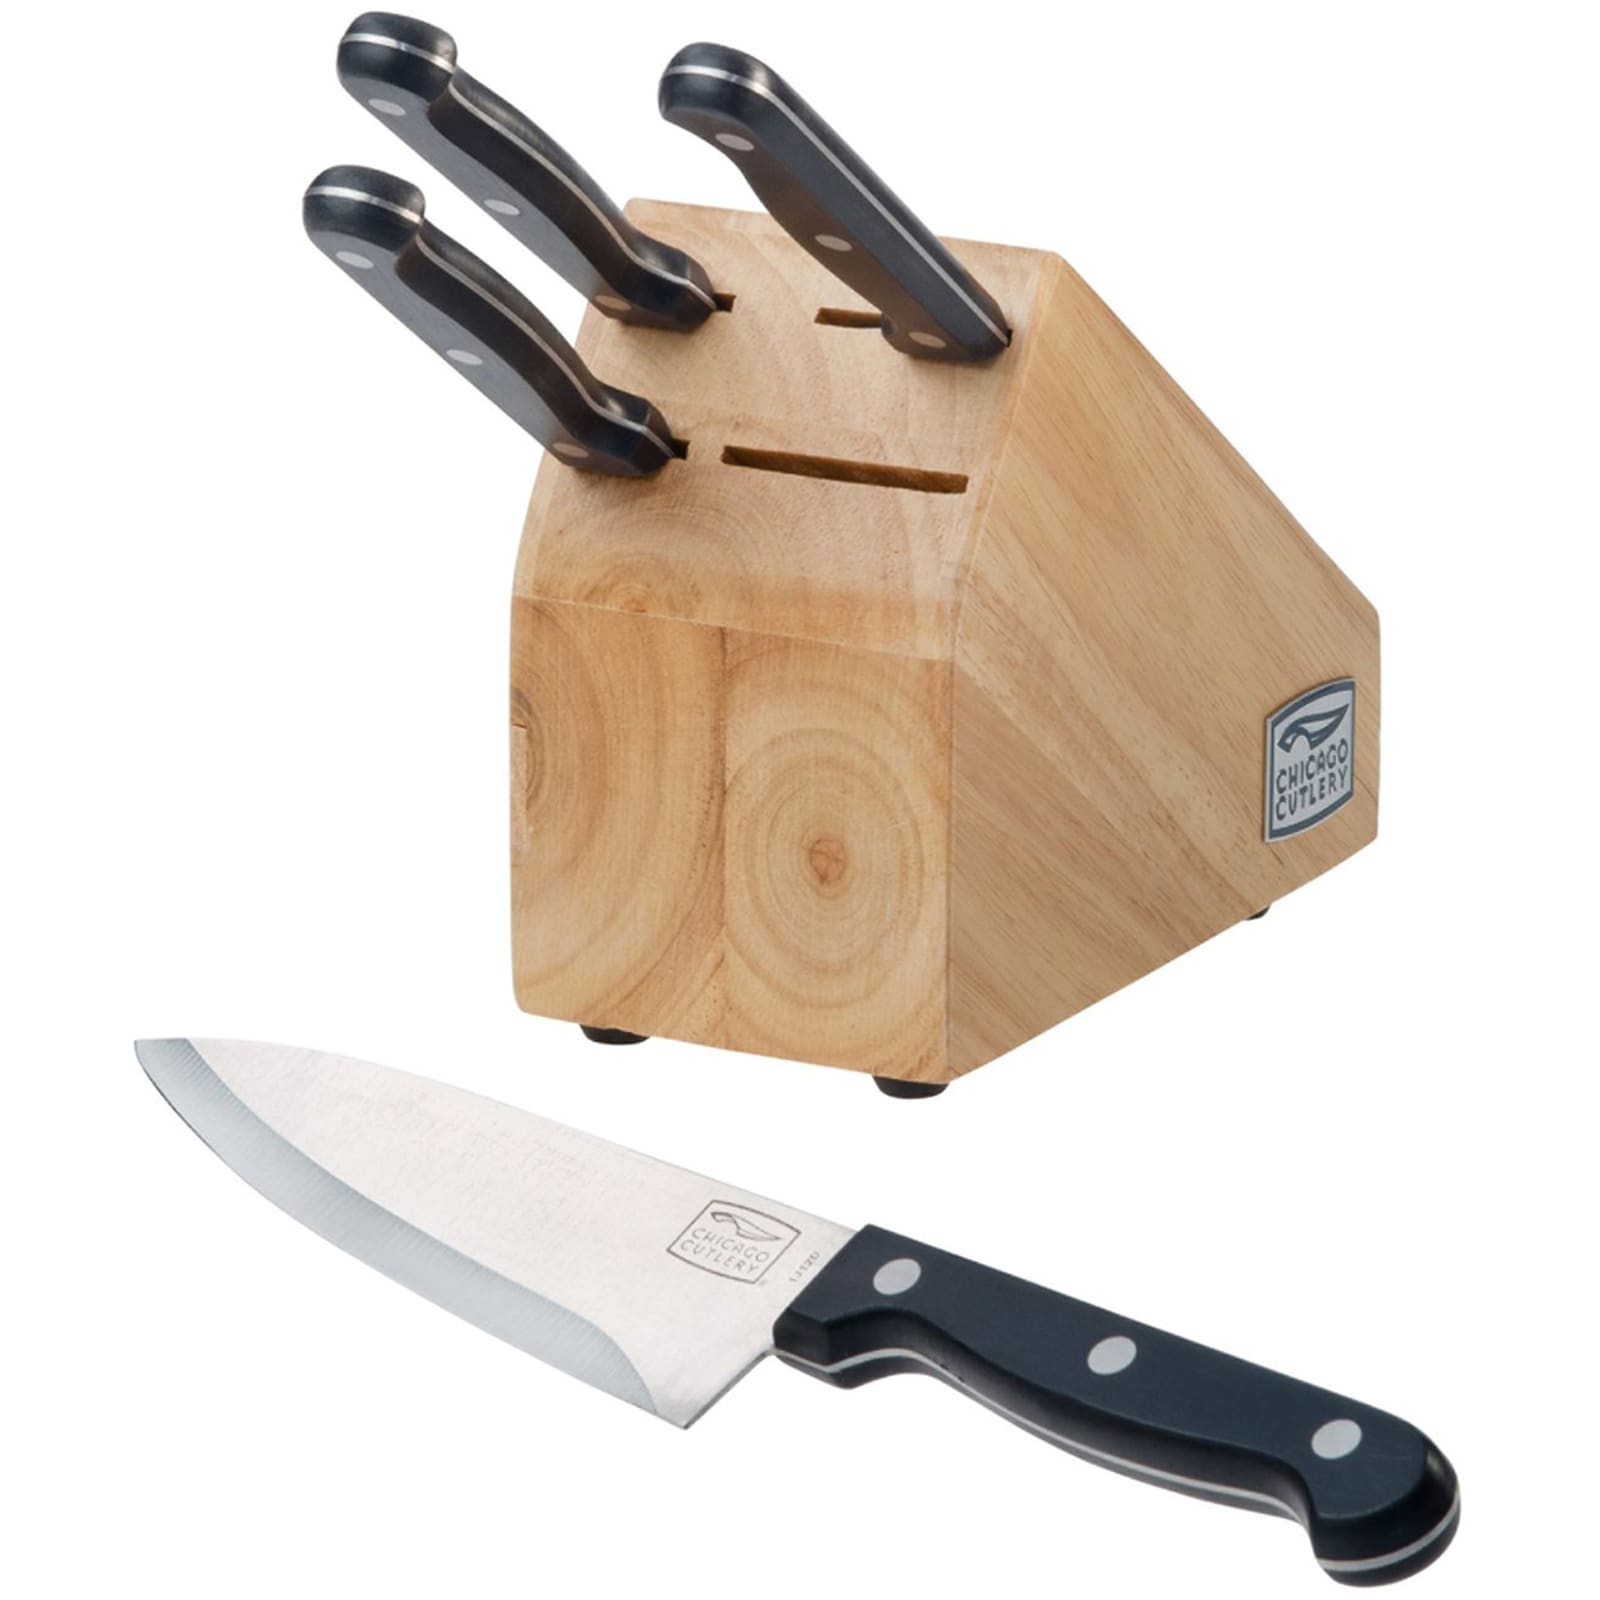 Essentials Knife Set by Chicago Cutlery at Fleet Farm